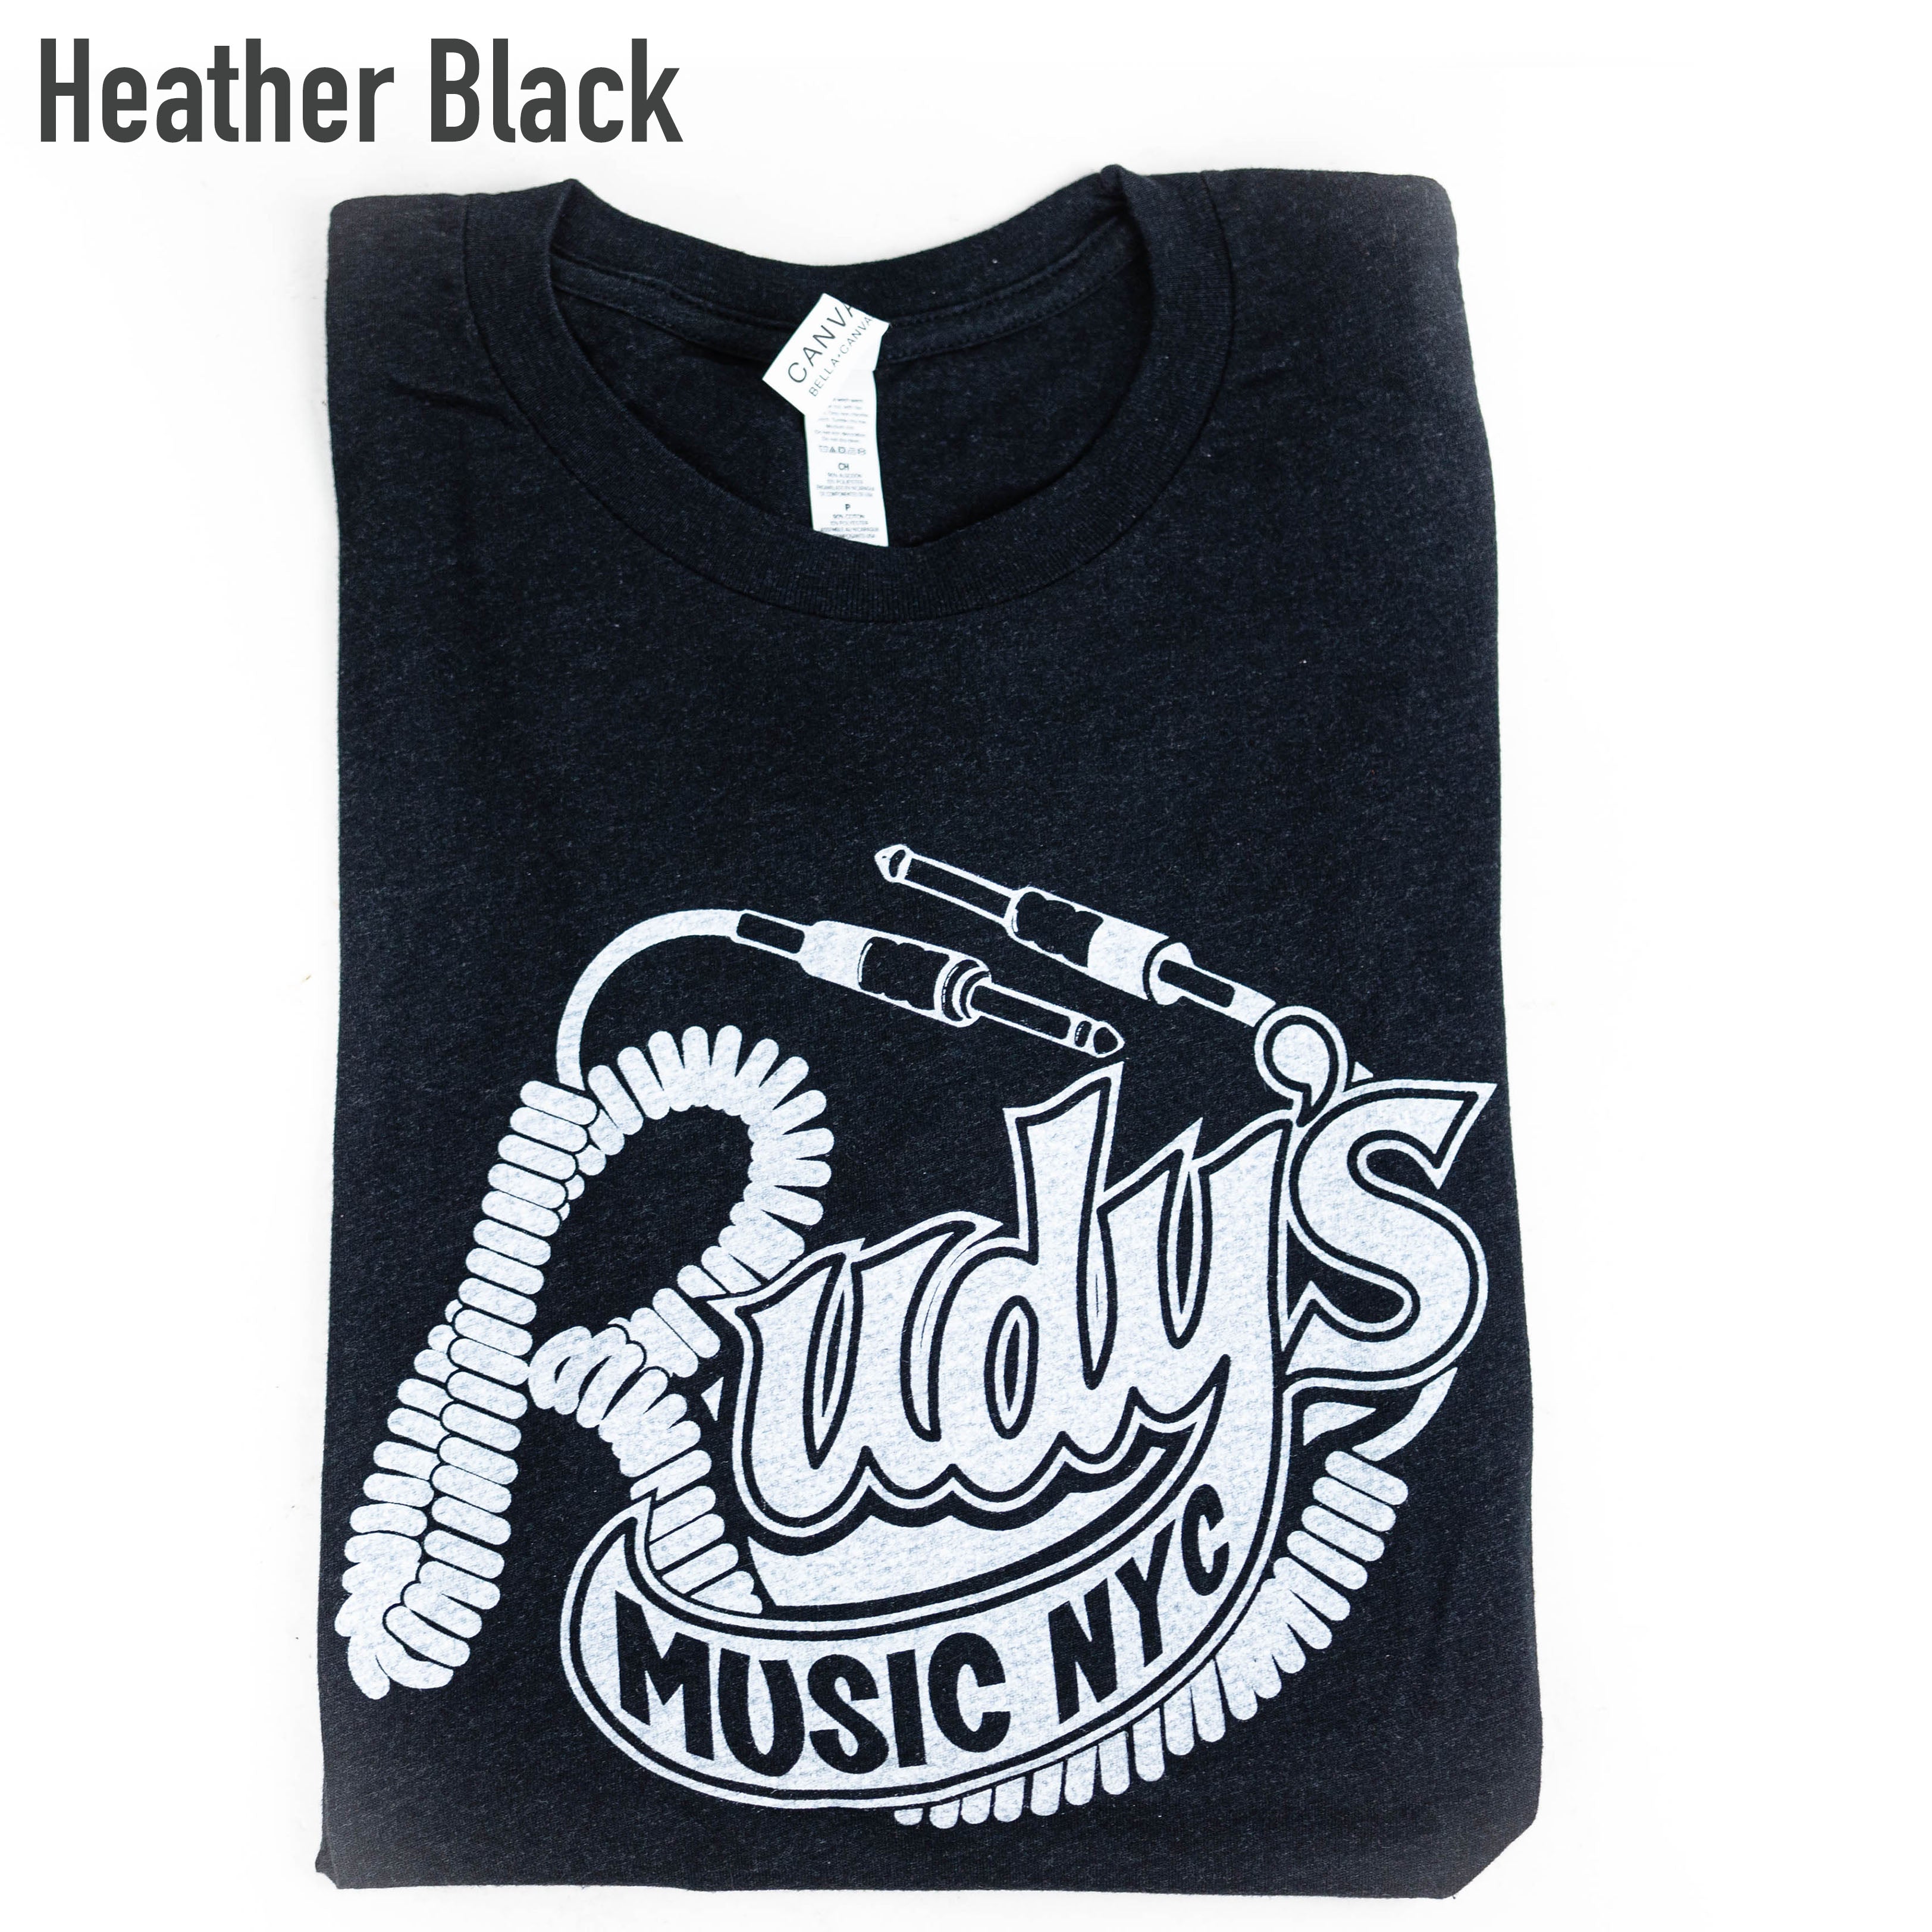 Rudy's Music T-Shirt Women's